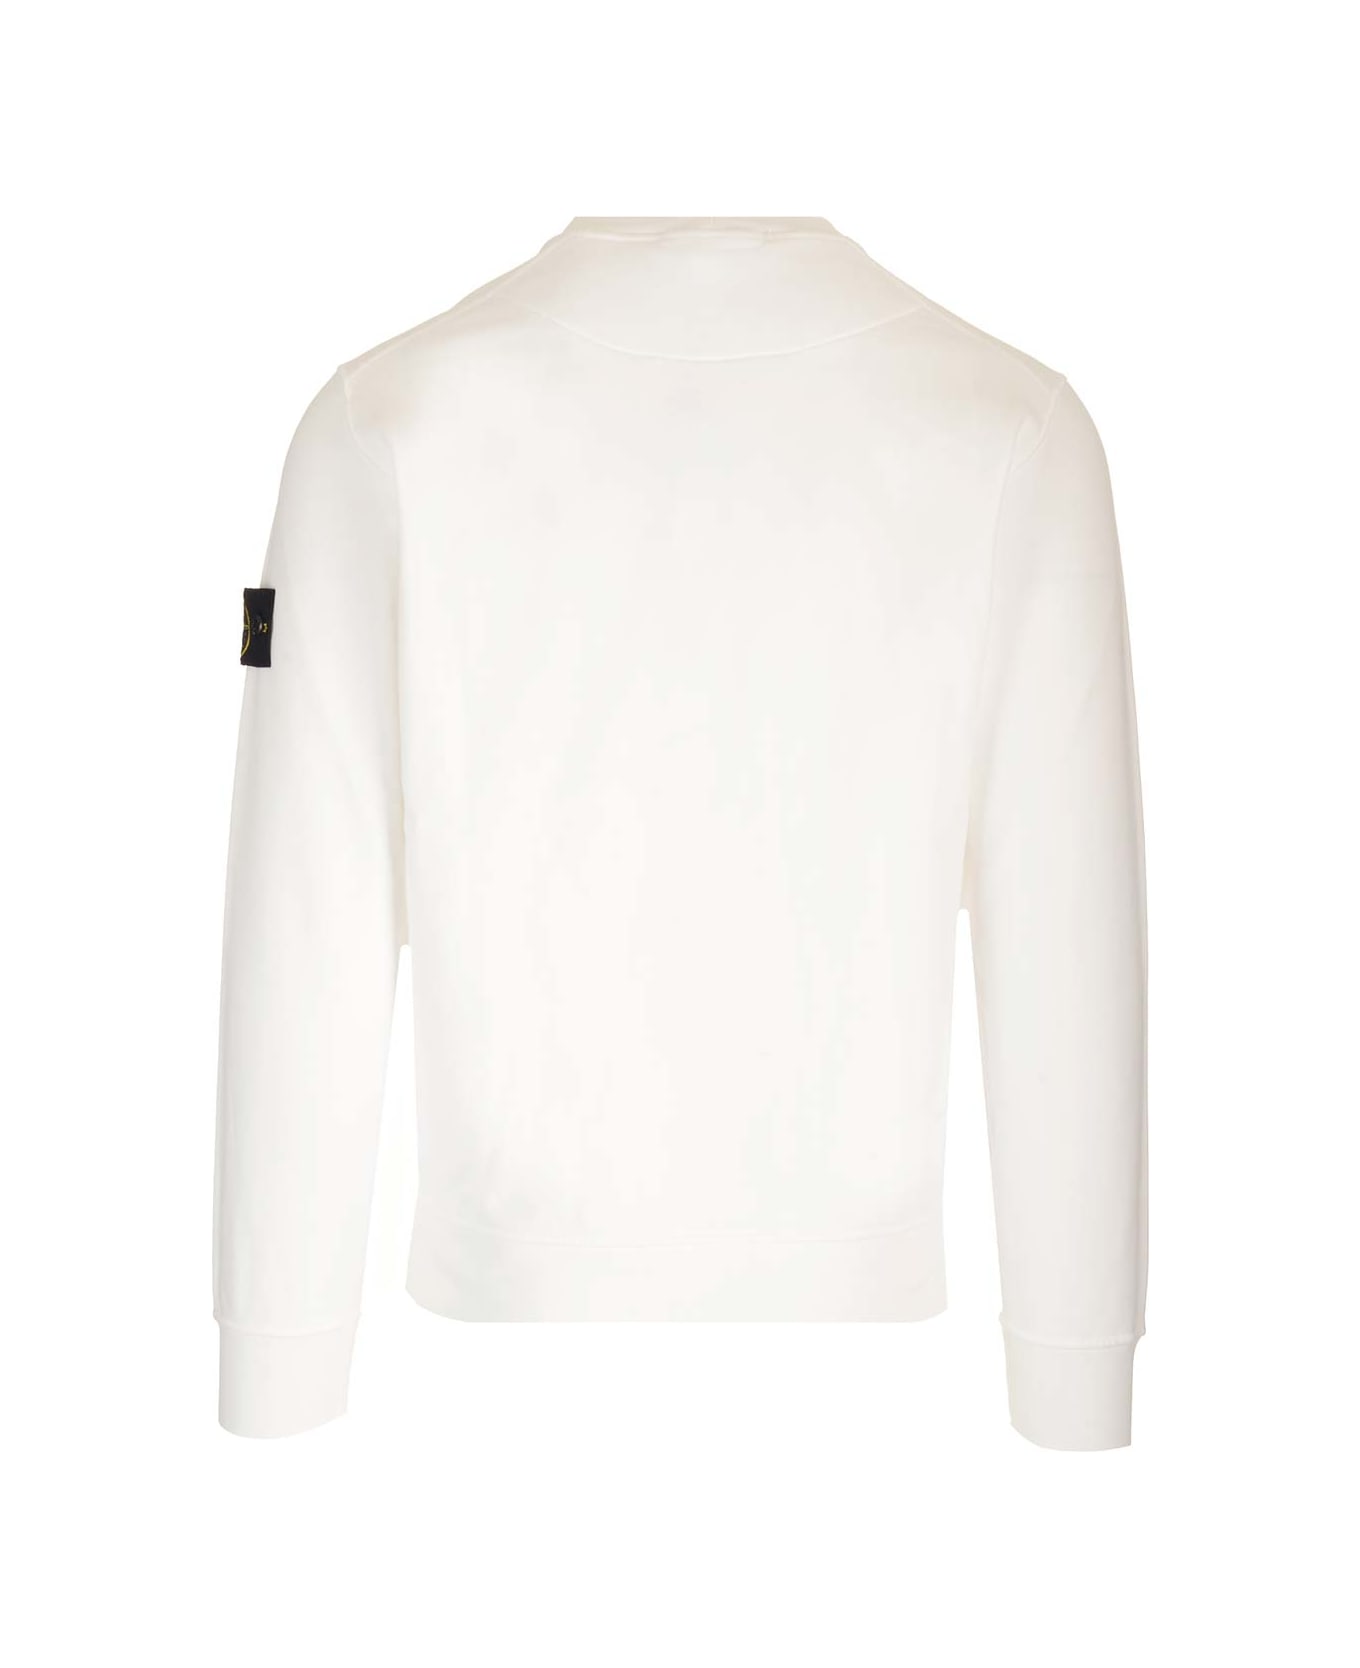 Stone Island Crew Neck Sweatshirt - White